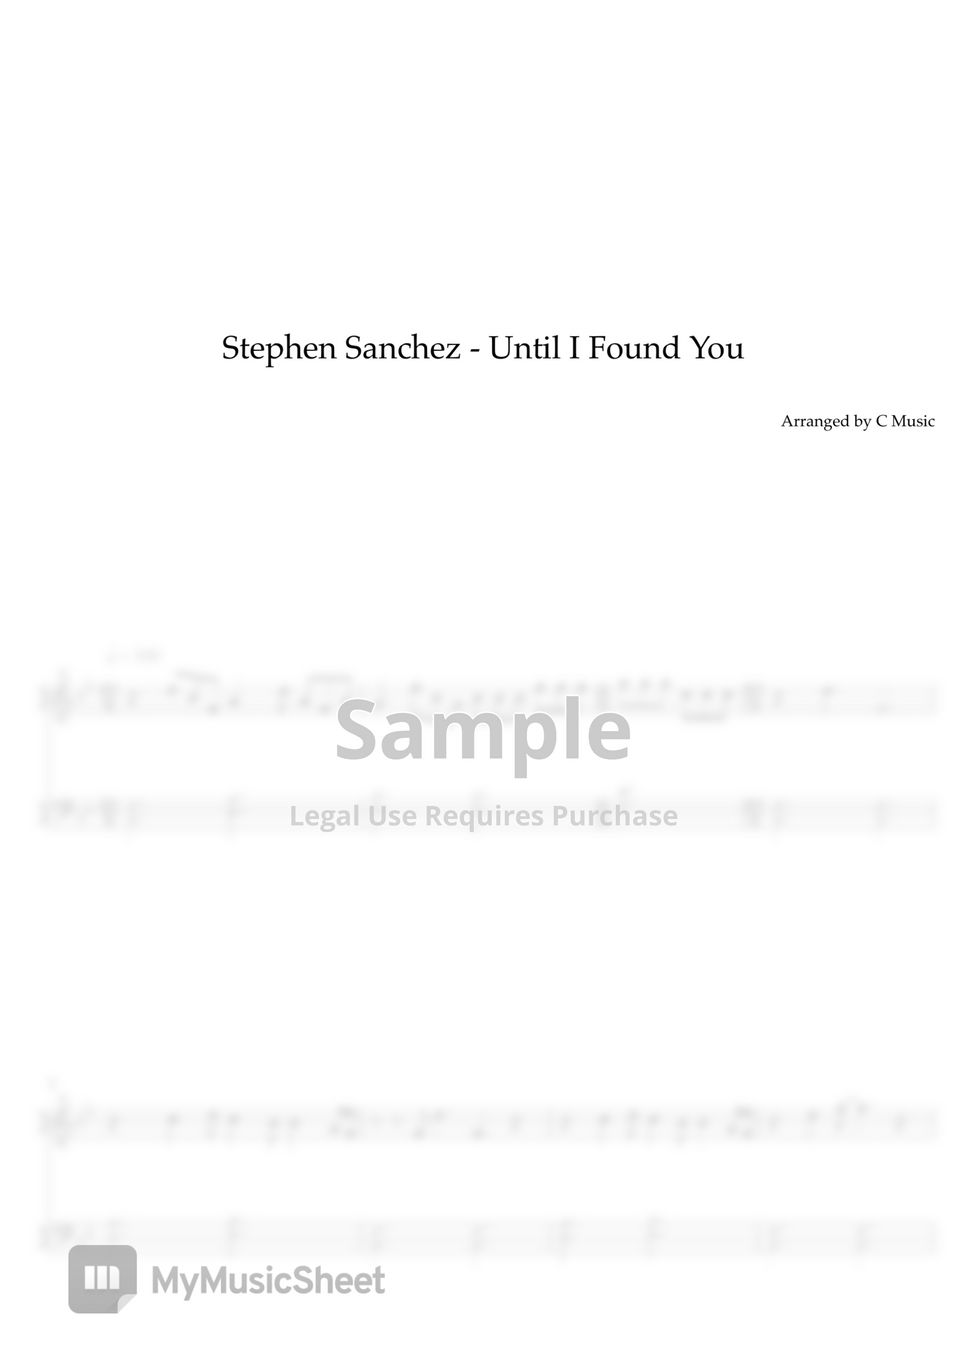 Stephen Sanchez - Until I Found You (Easy Version) by C Music